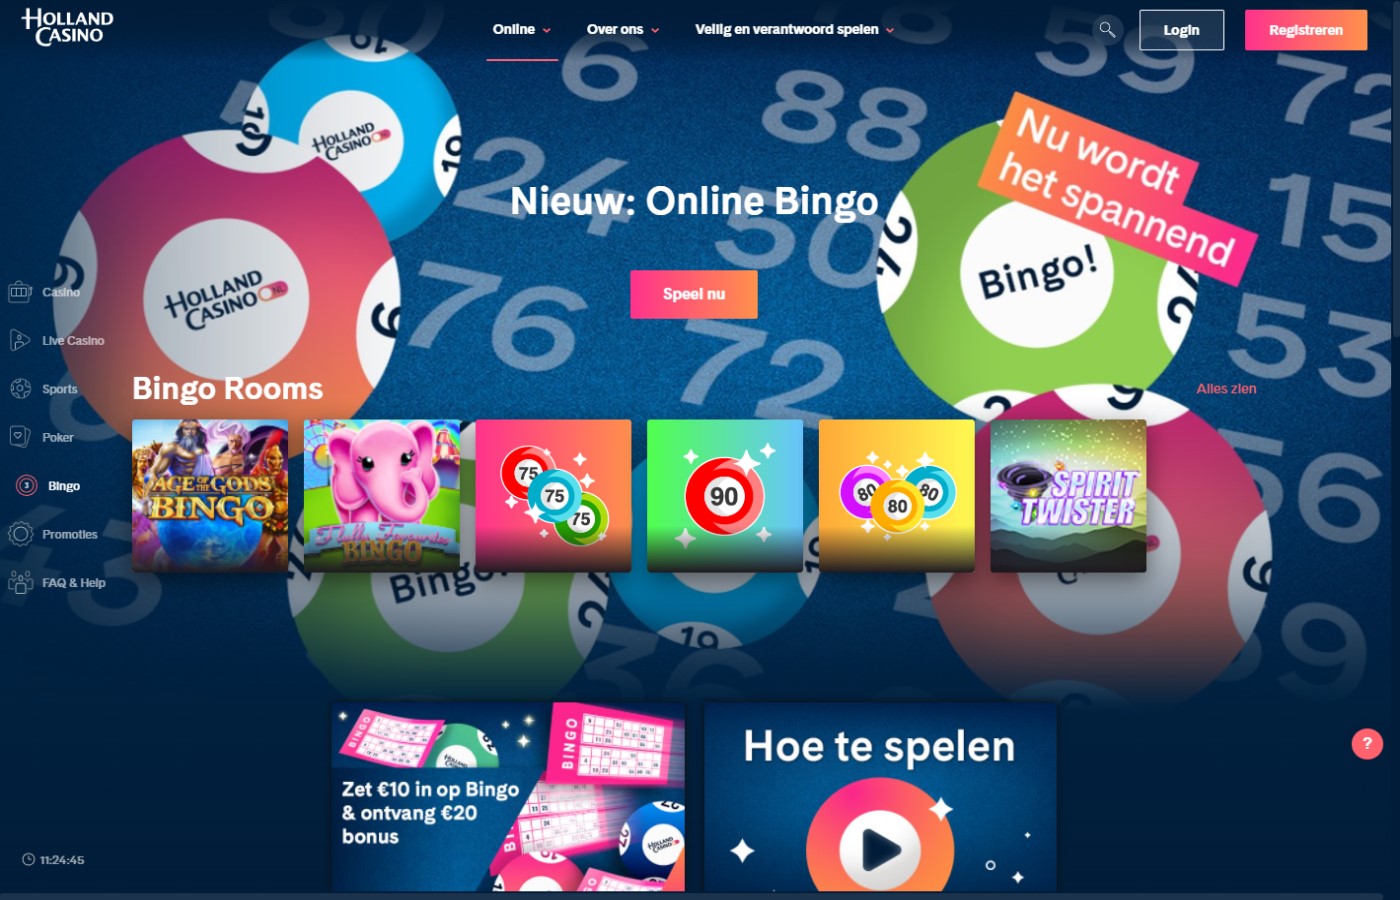 Holland casino bingo